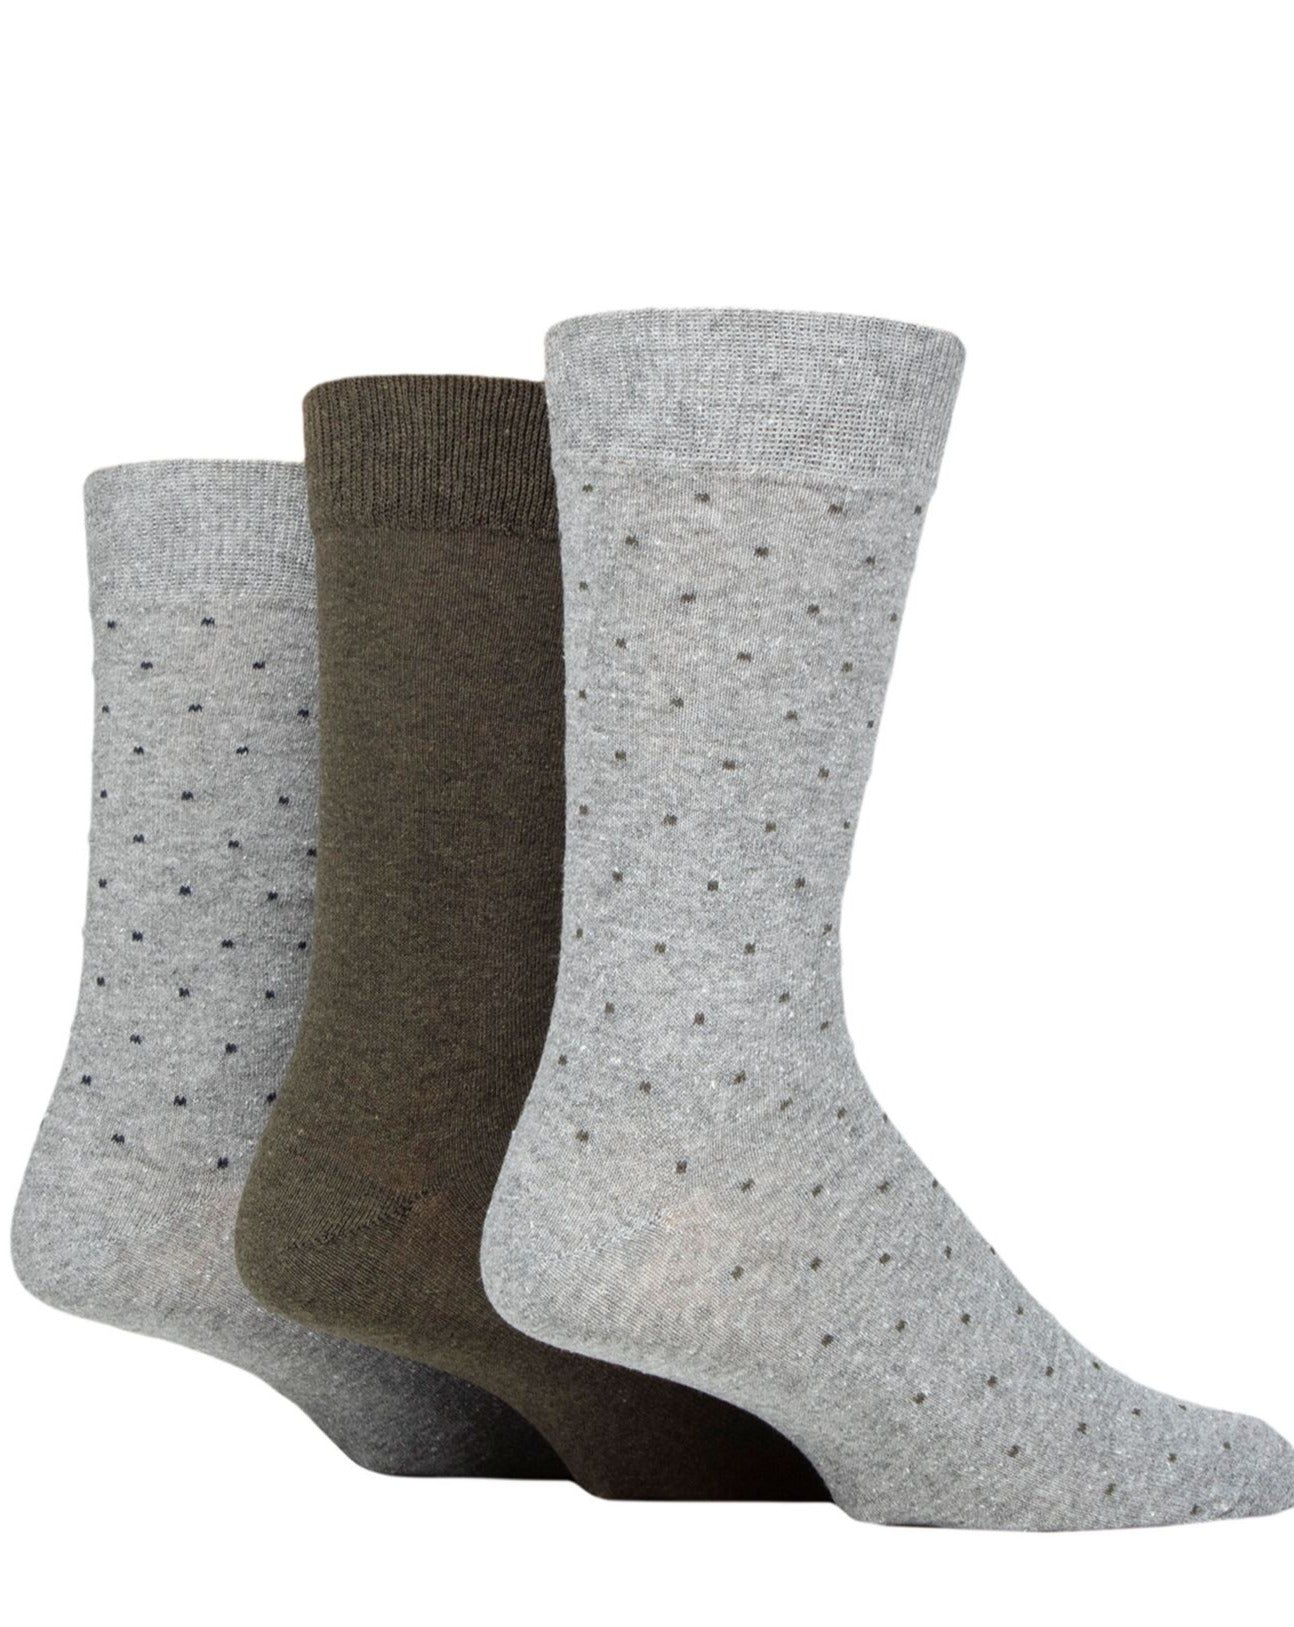 TORE 3Pk 100% Recycled Cotton Fashion Pin Dot Socks- Mens 7-11